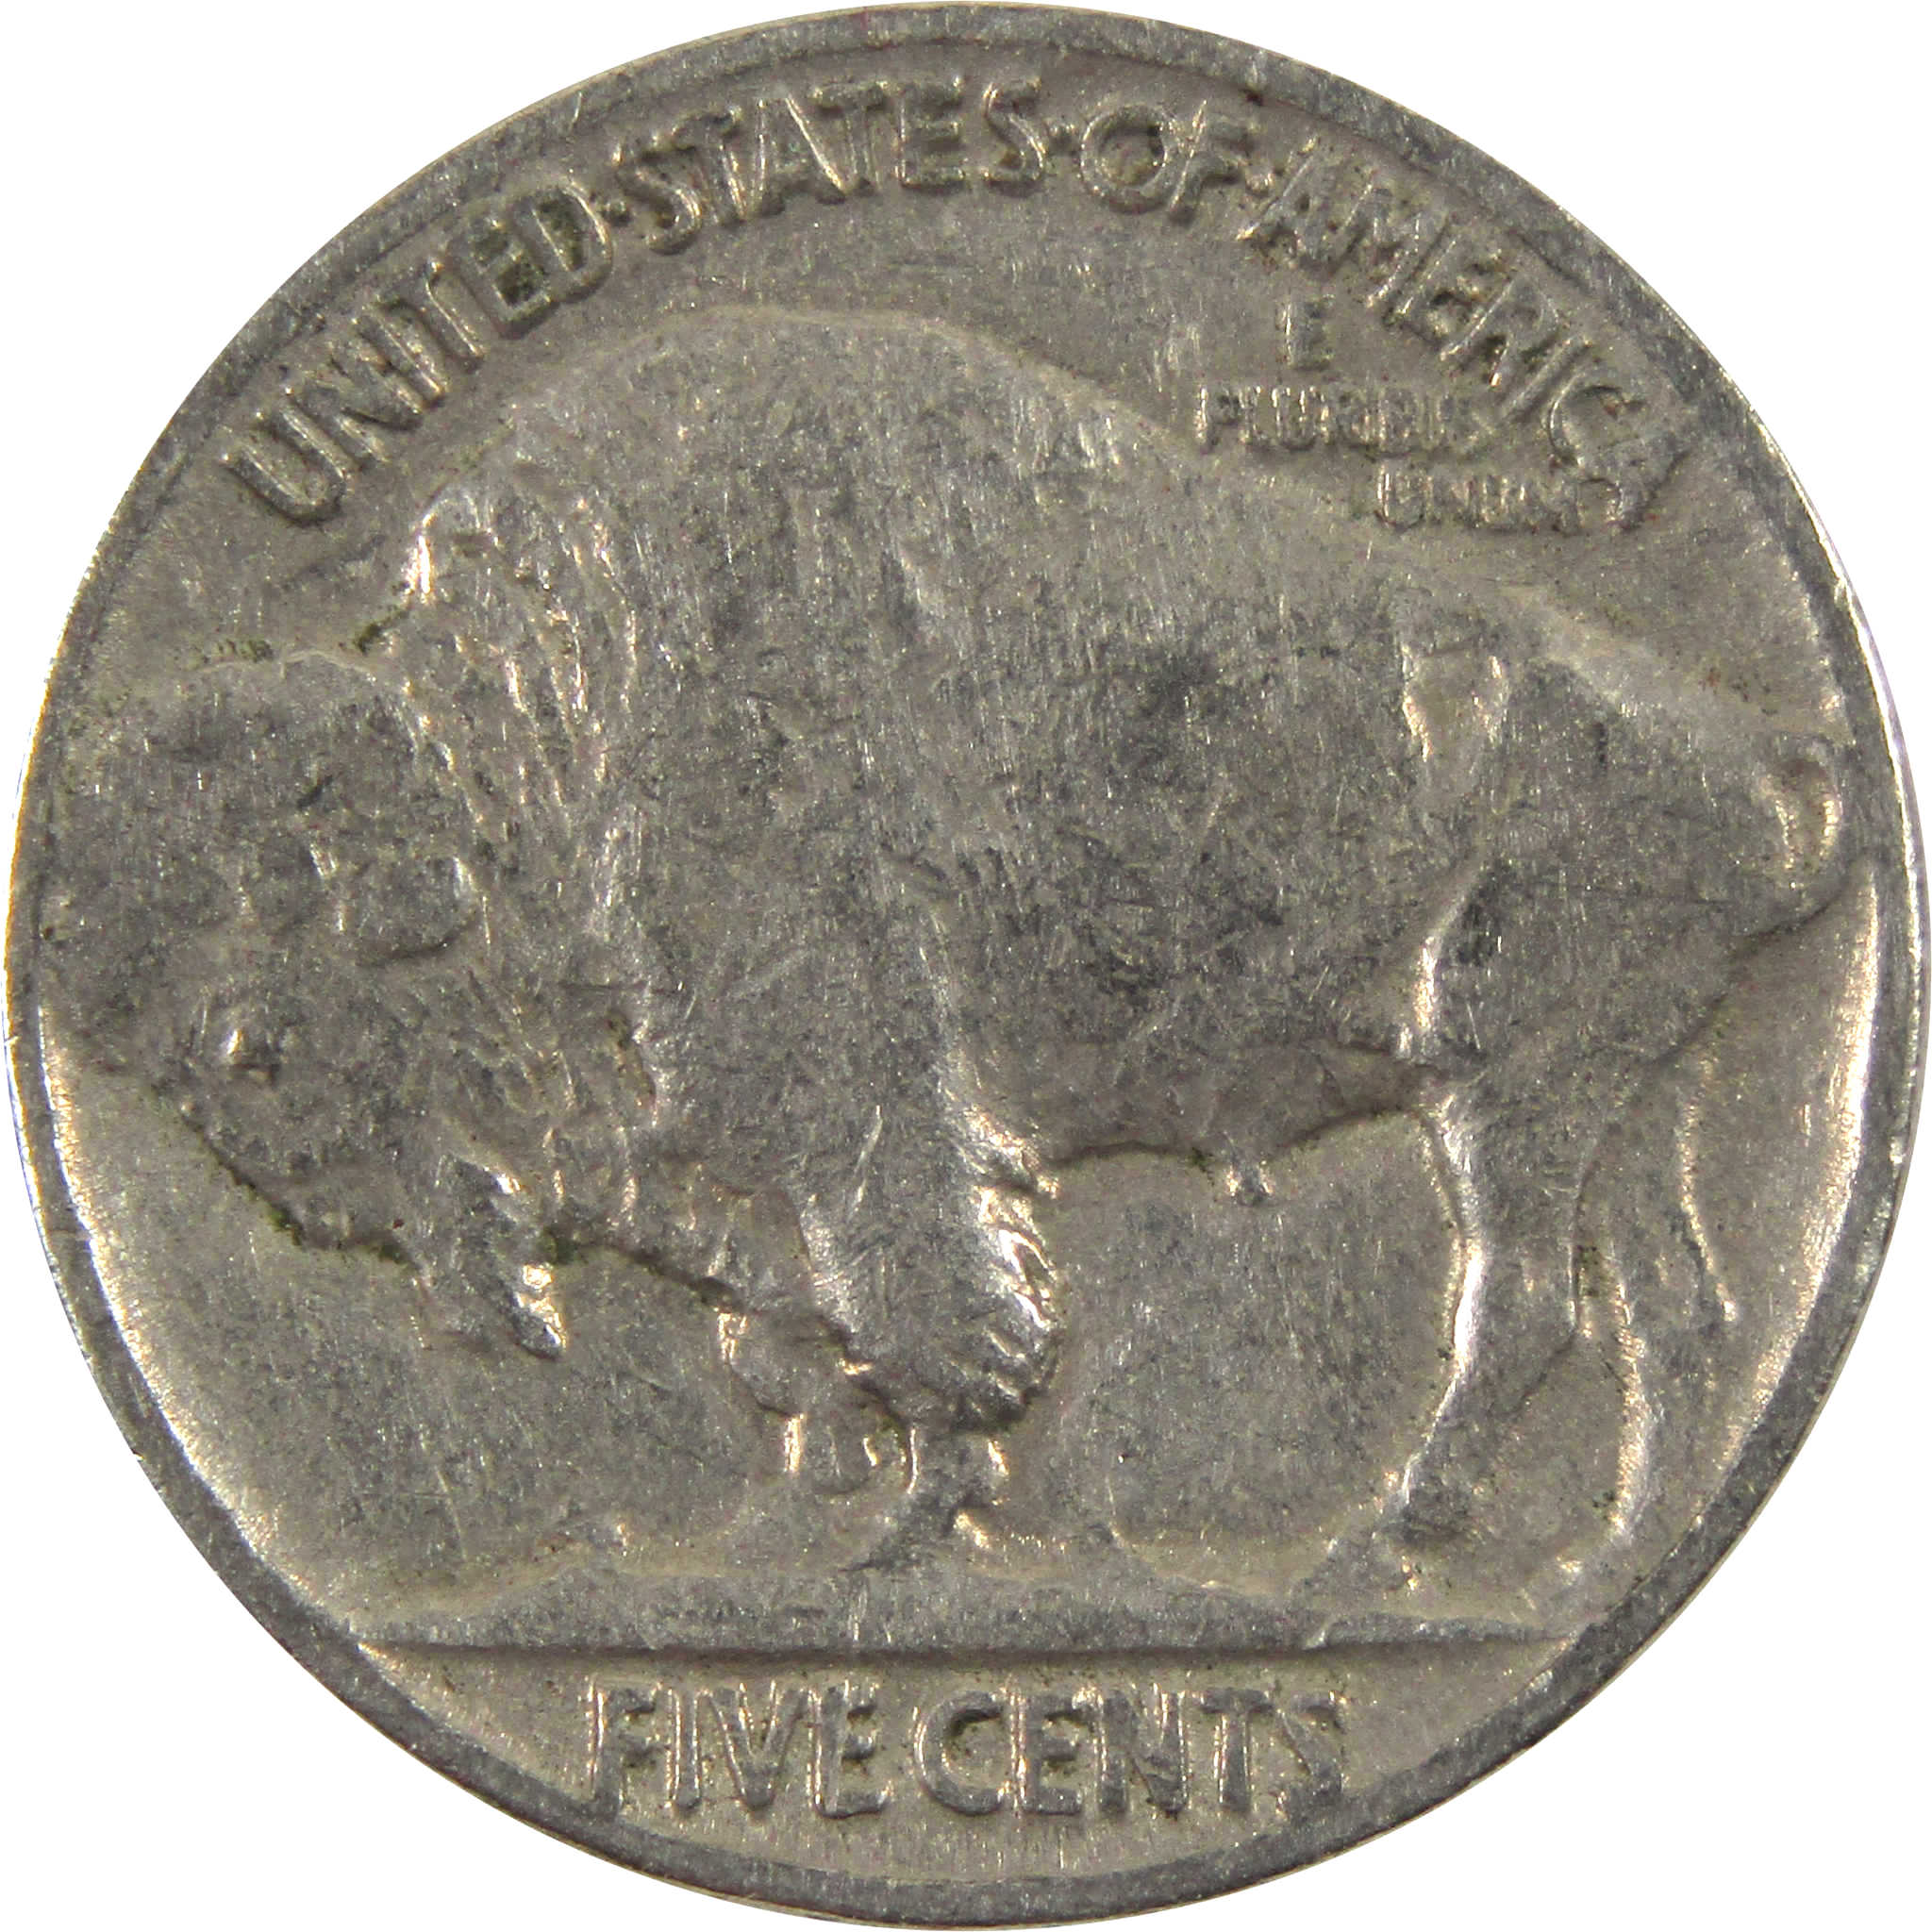 1937 Indian Head Buffalo Nickel F Fine 5c Coin